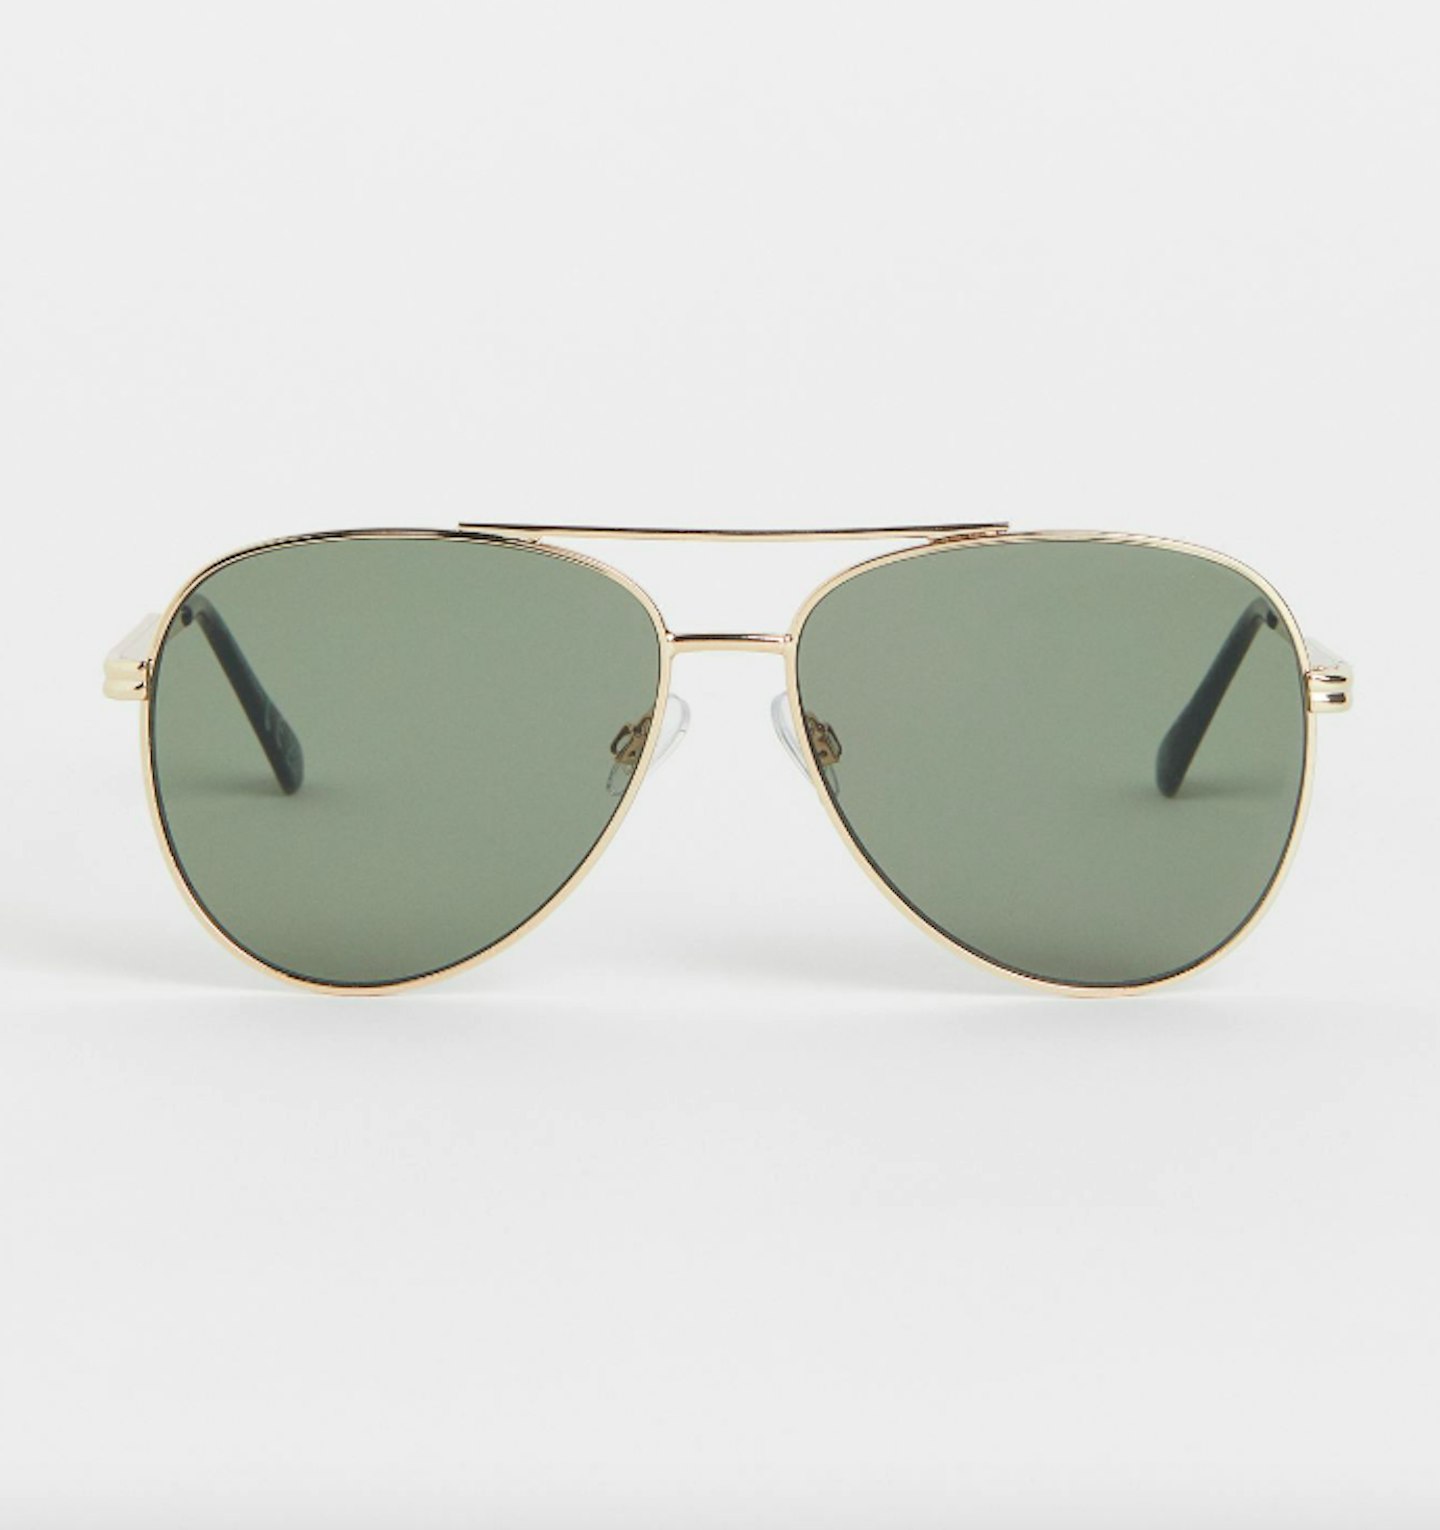 Gemma Owen's Gold Sunglasses Are From Dita Eyewear